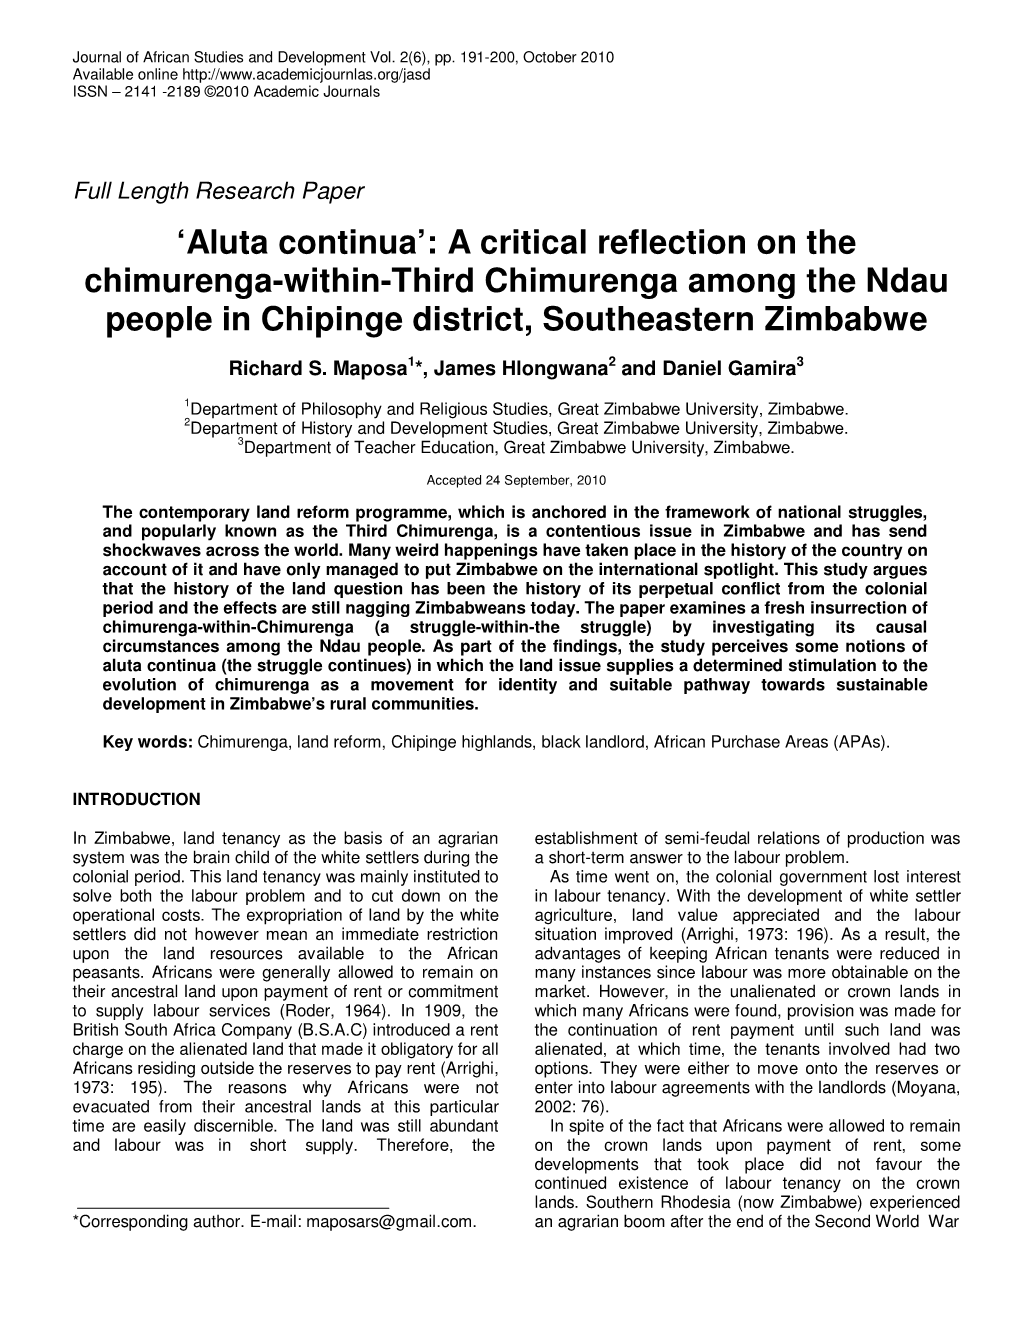 Aluta Continua’: a Critical Reflection on the Chimurenga-Within-Third Chimurenga Among the Ndau People in Chipinge District, Southeastern Zimbabwe